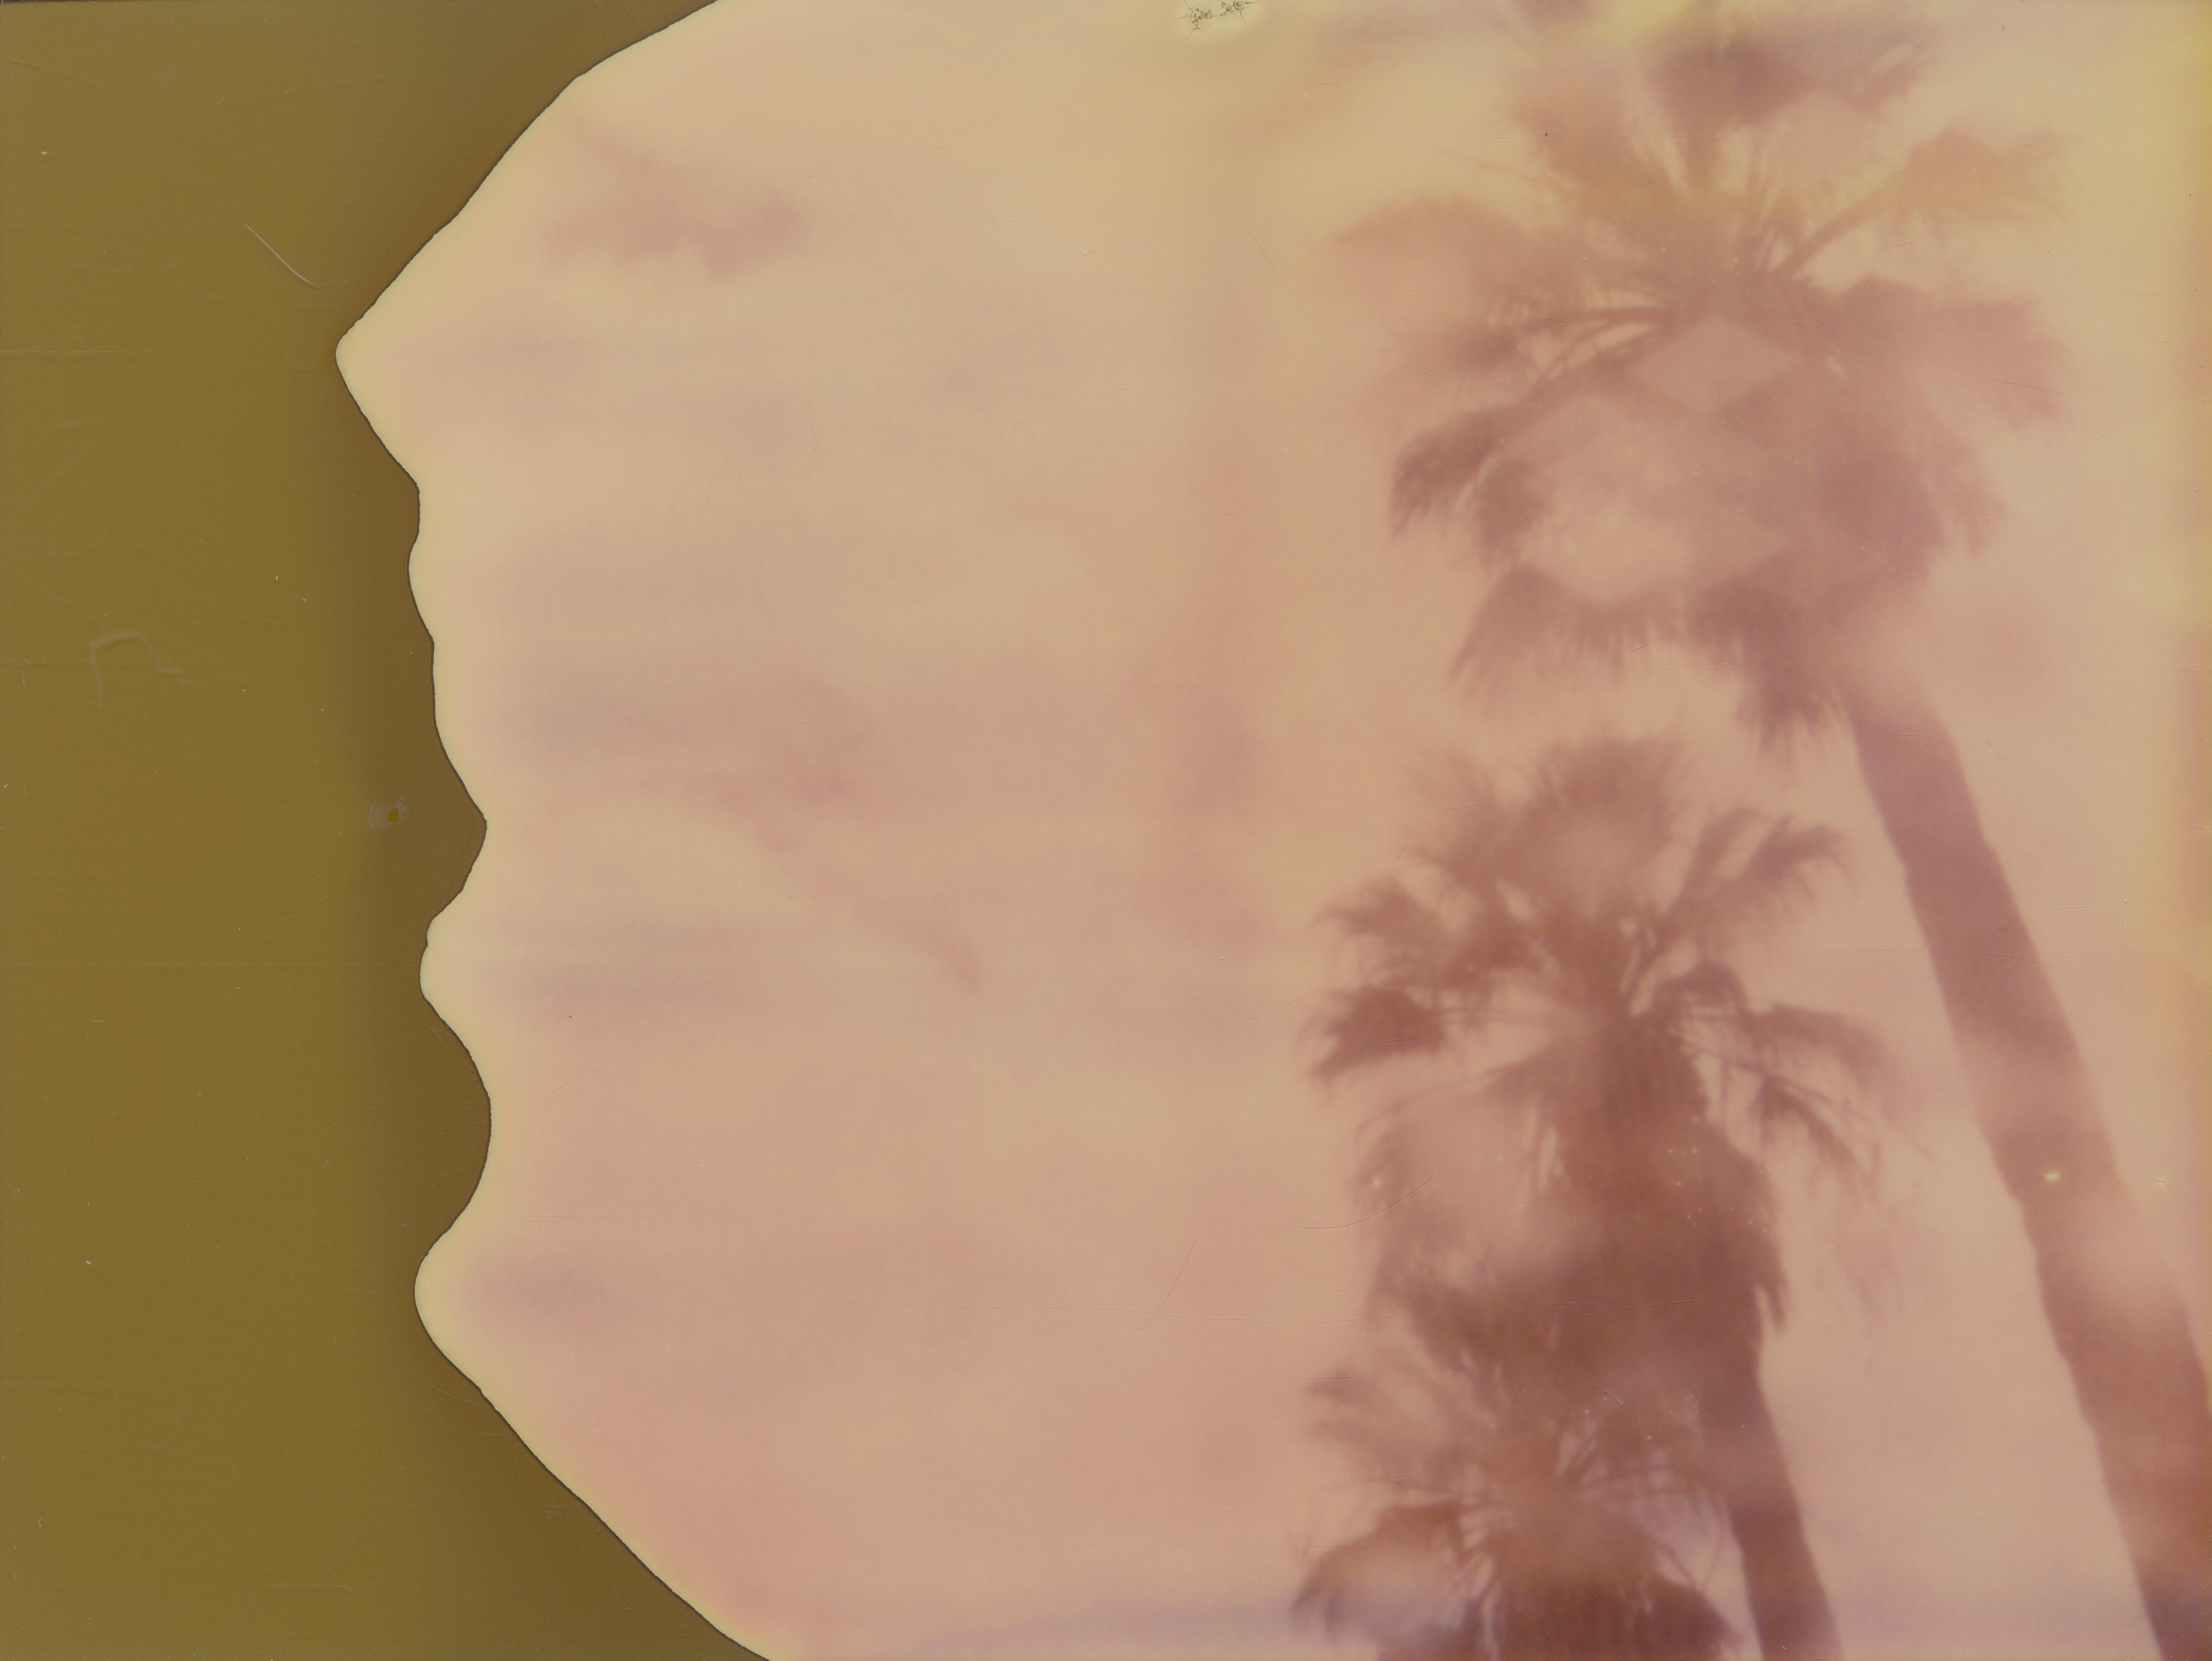 Stefanie Schneider Color Photograph - Palm Trees in the Rain (Stranger than Paradise) - Polaroid, 21st Century, Color